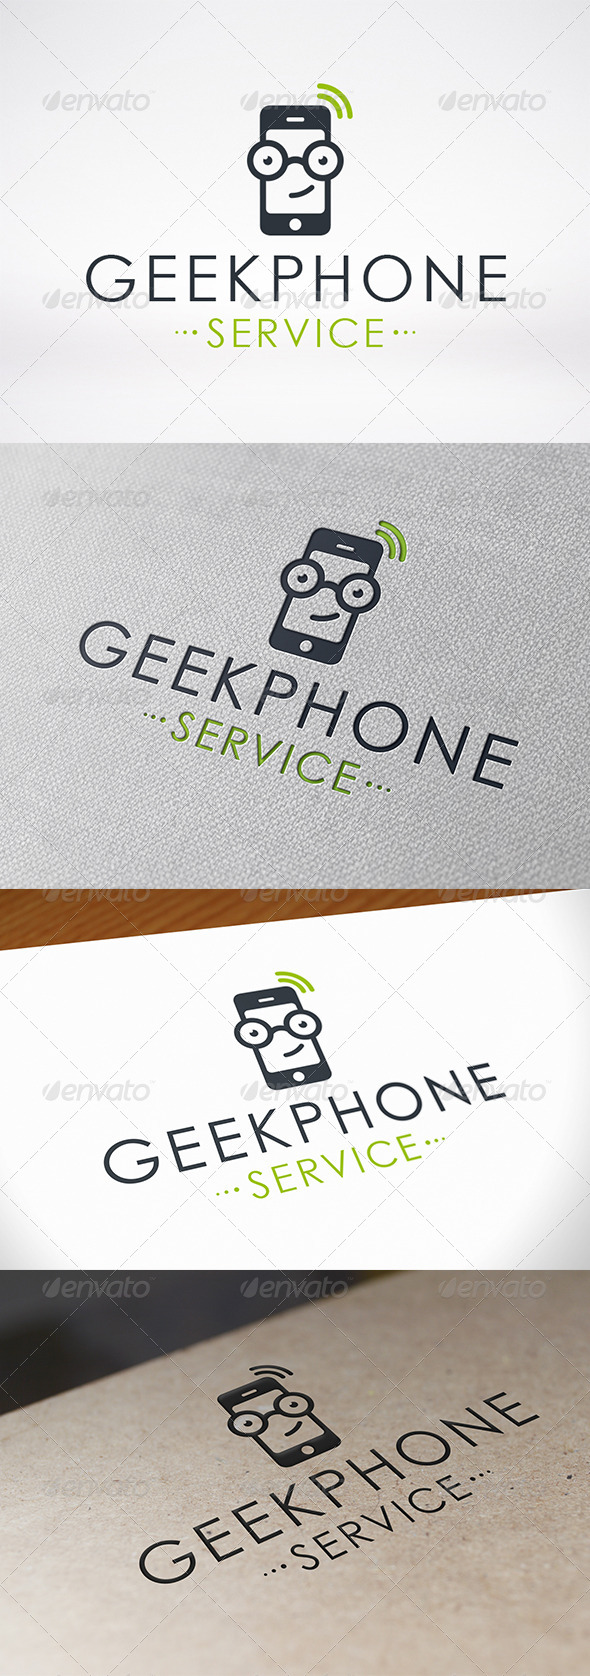 Geek Phone Logo Template